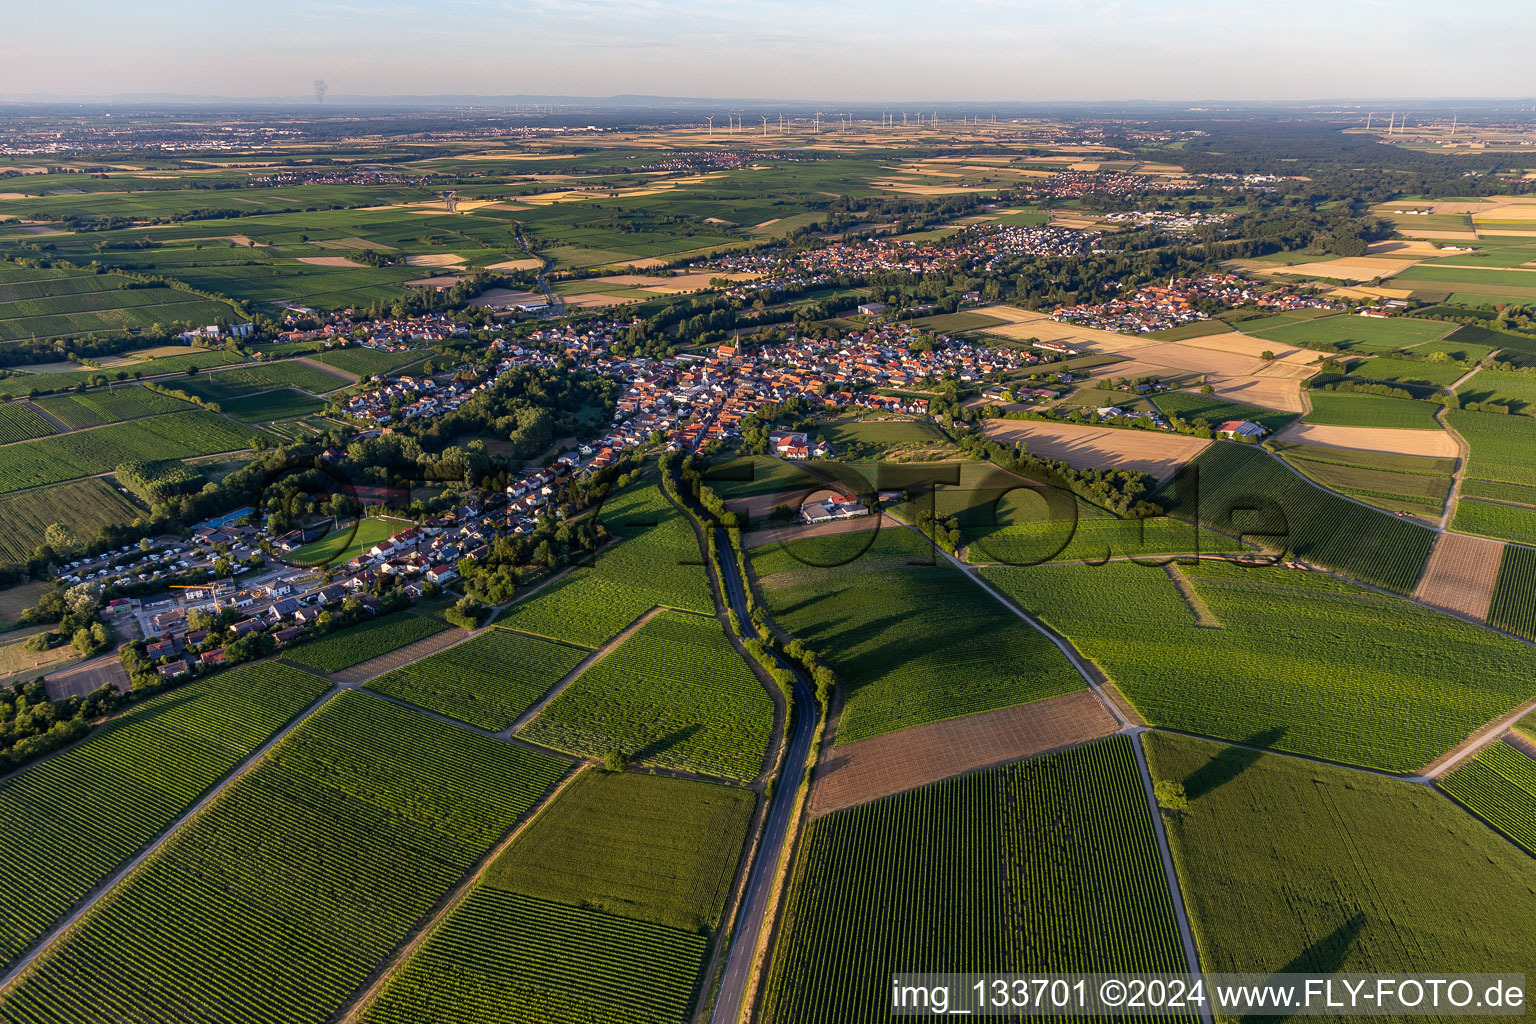 District Ingenheim in Billigheim-Ingenheim in the state Rhineland-Palatinate, Germany seen from above